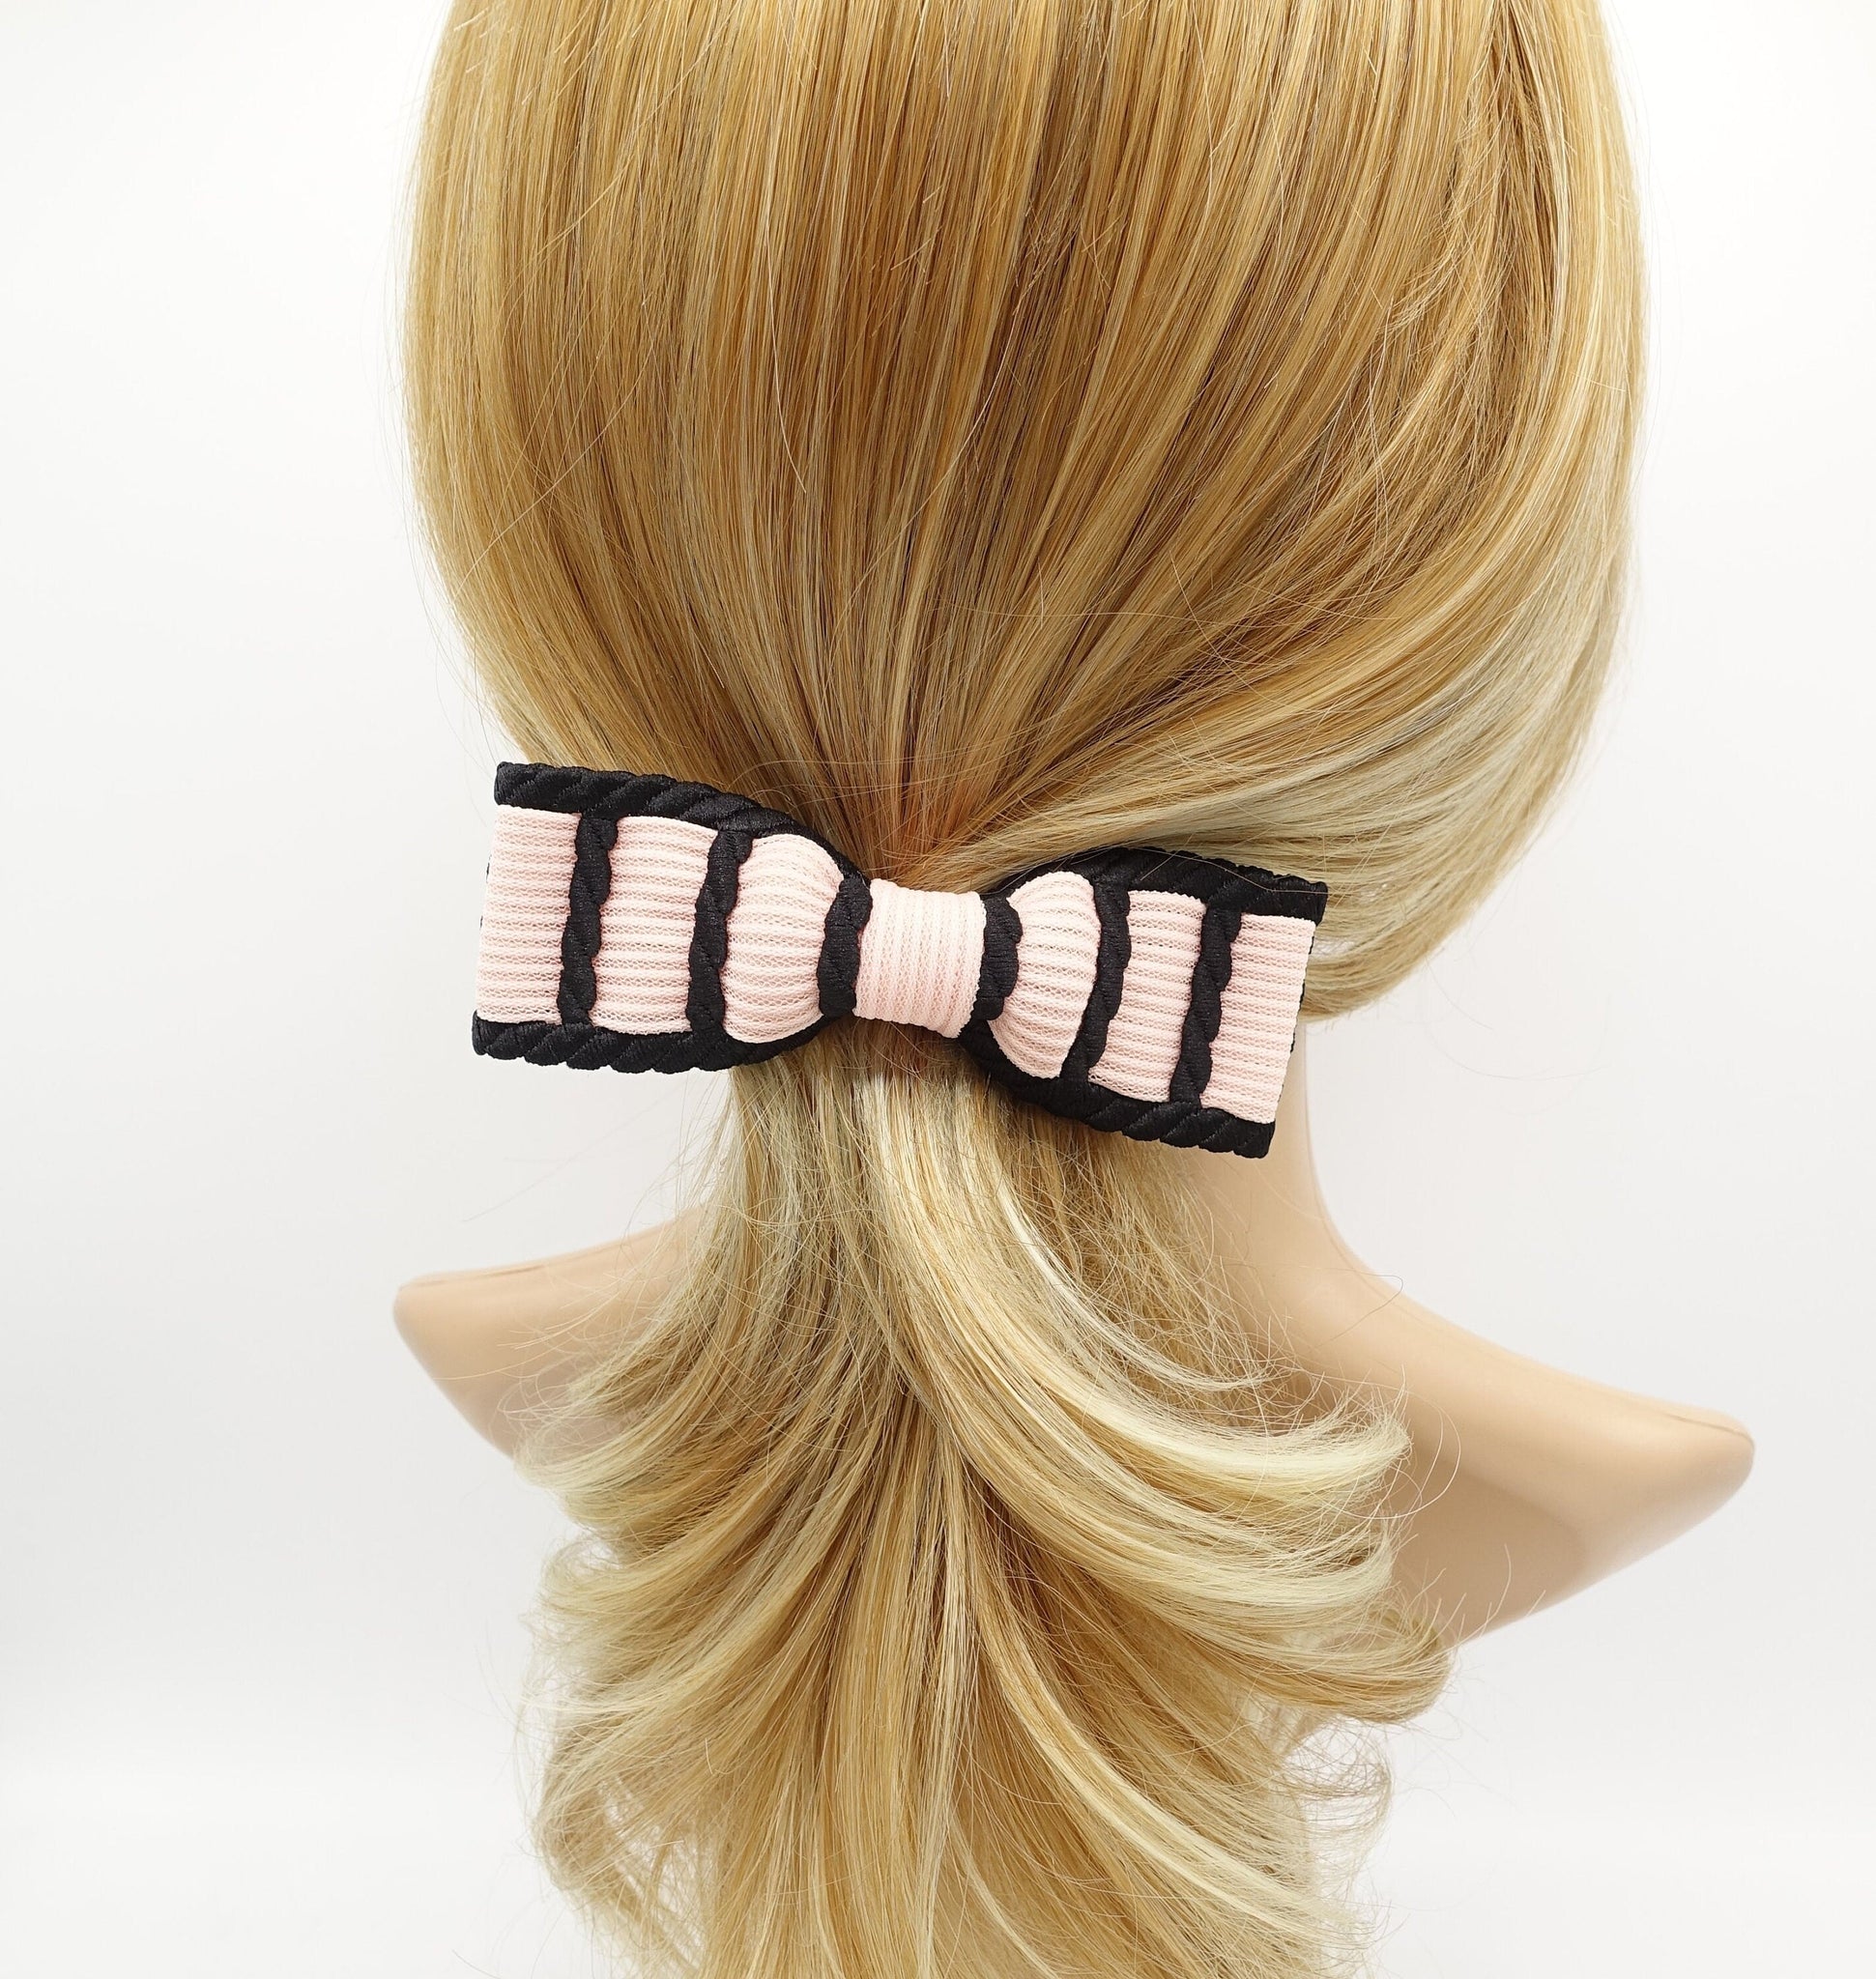 veryshine.com Barrette (Bow) pleated fabric hair bow twisted edge fabric trim hair bow women hair accessory